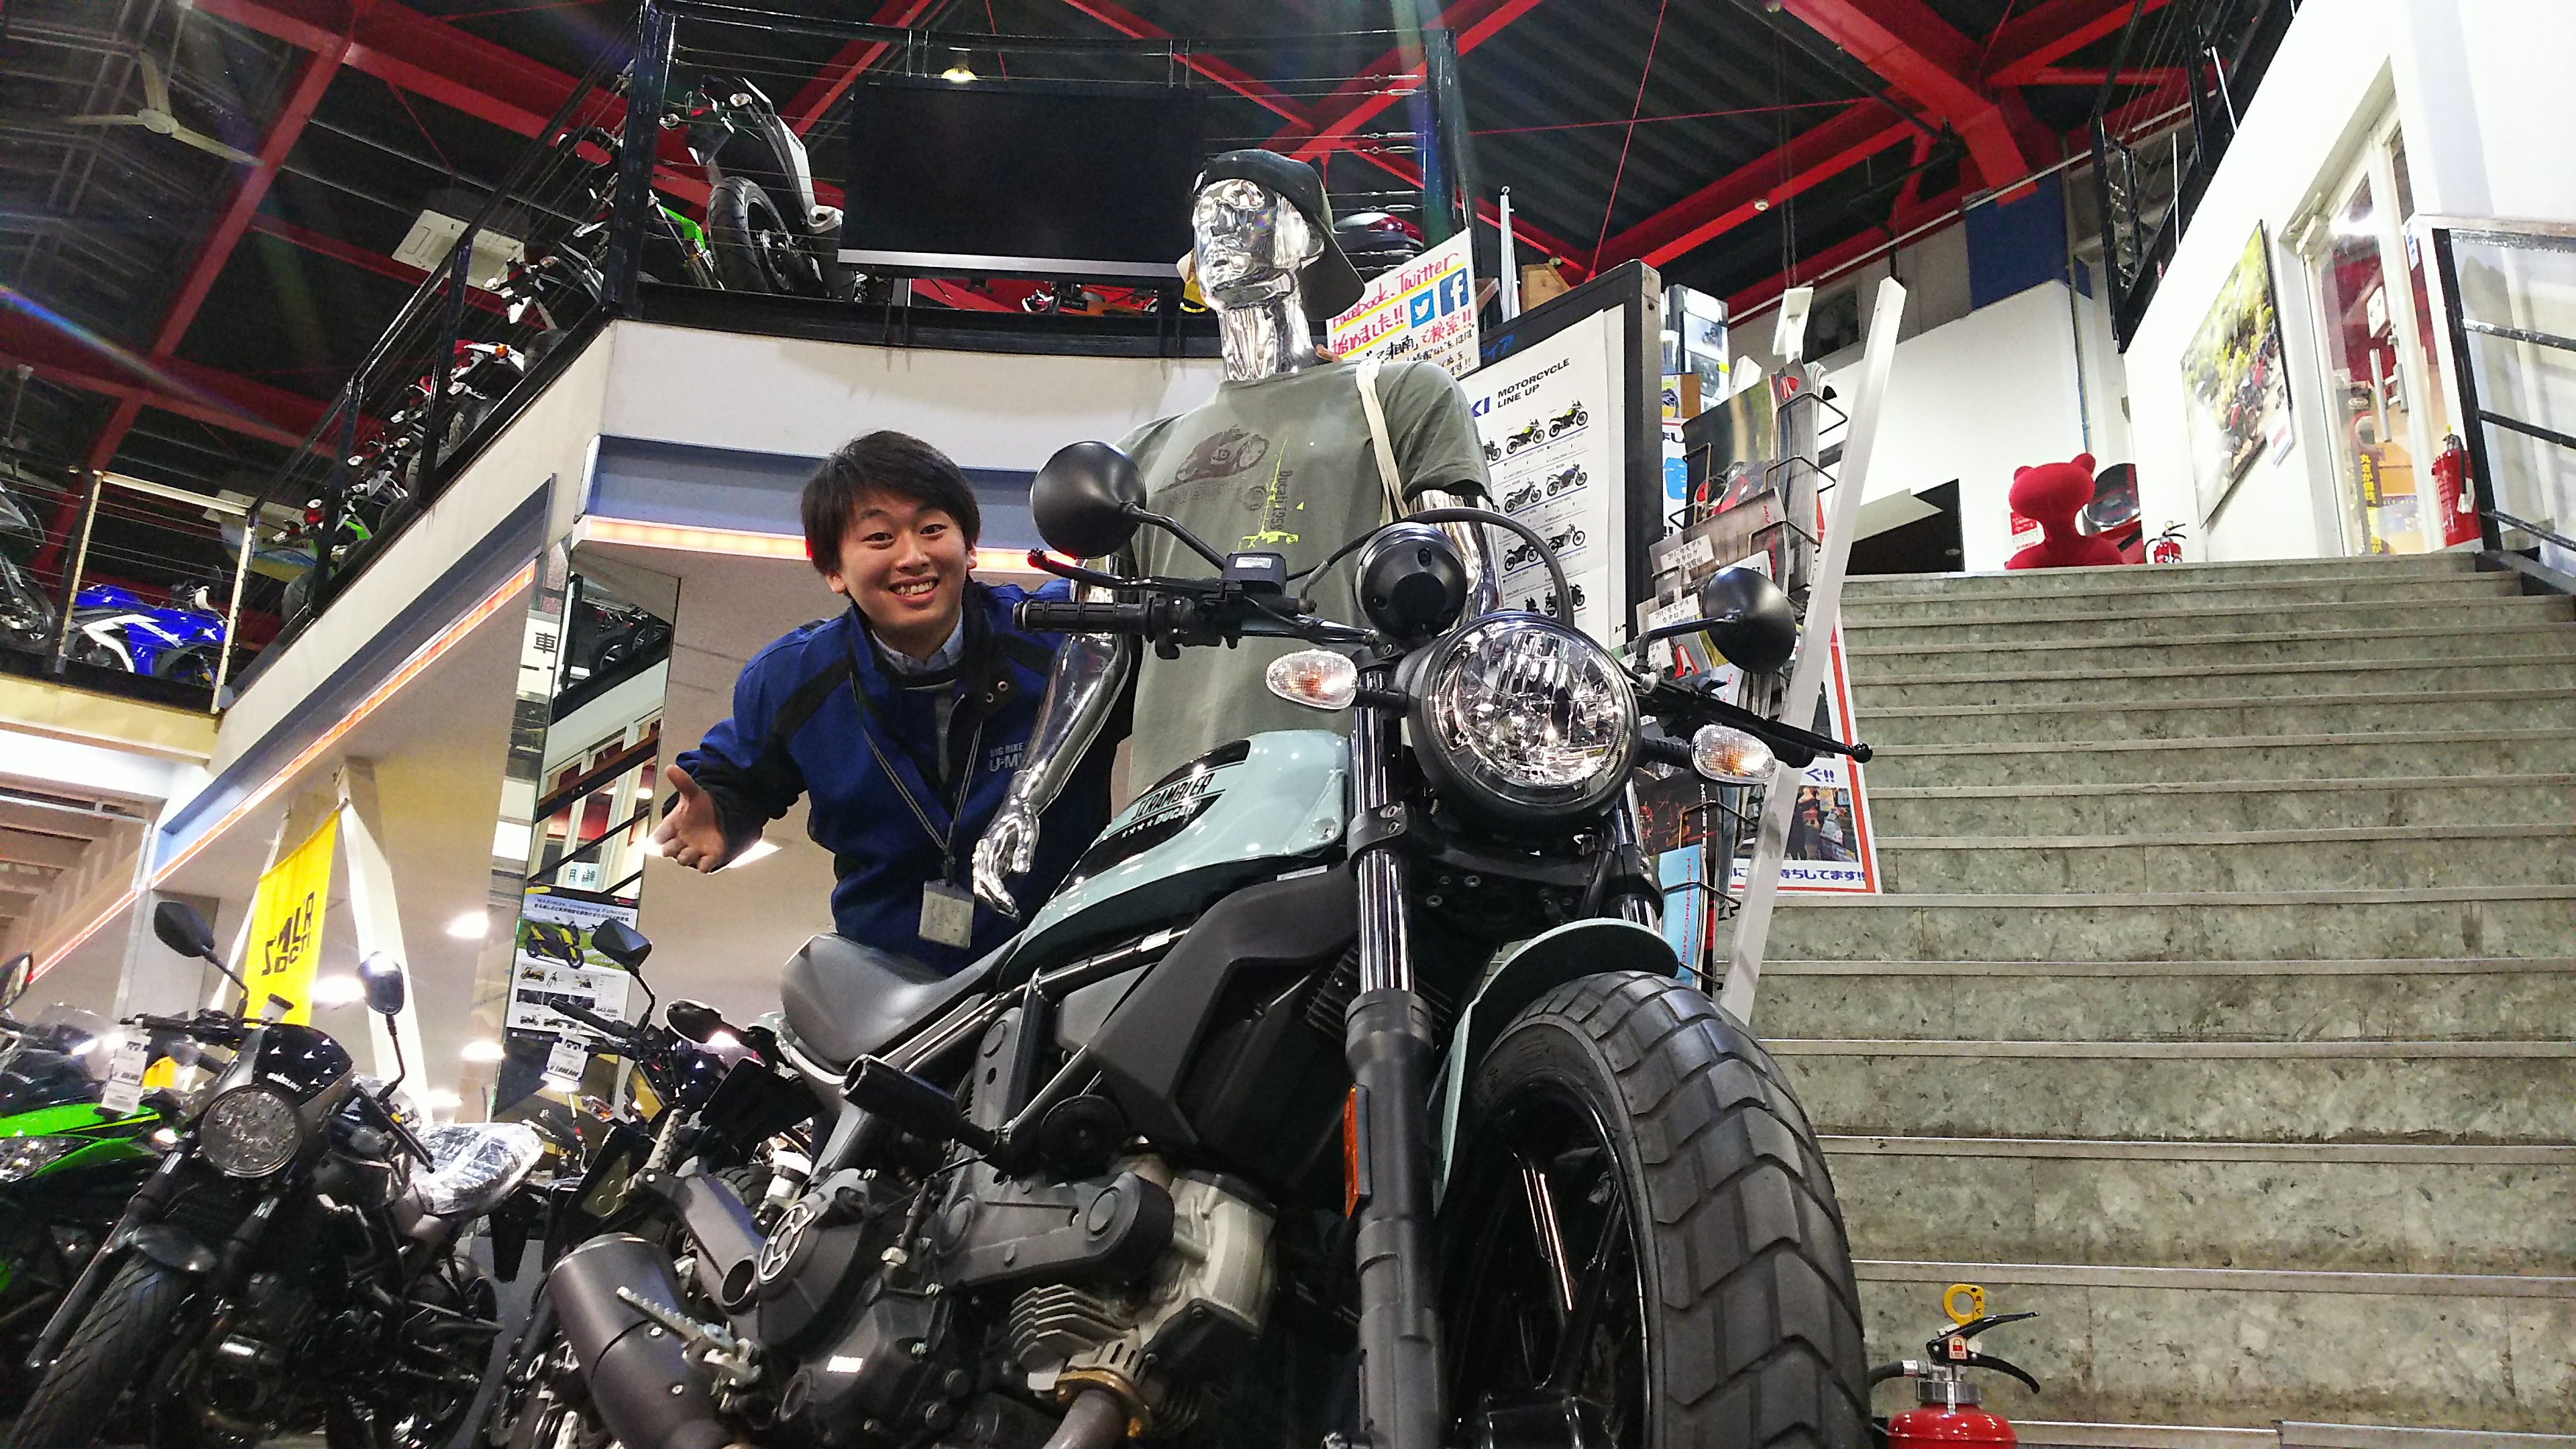 Sixty2がオレンジの一色展開になってしまいます 最新情報 U Media ユーメディア 中古バイク 新車バイク 探しの決定版 神奈川 東京でバイク探すならユーメディア